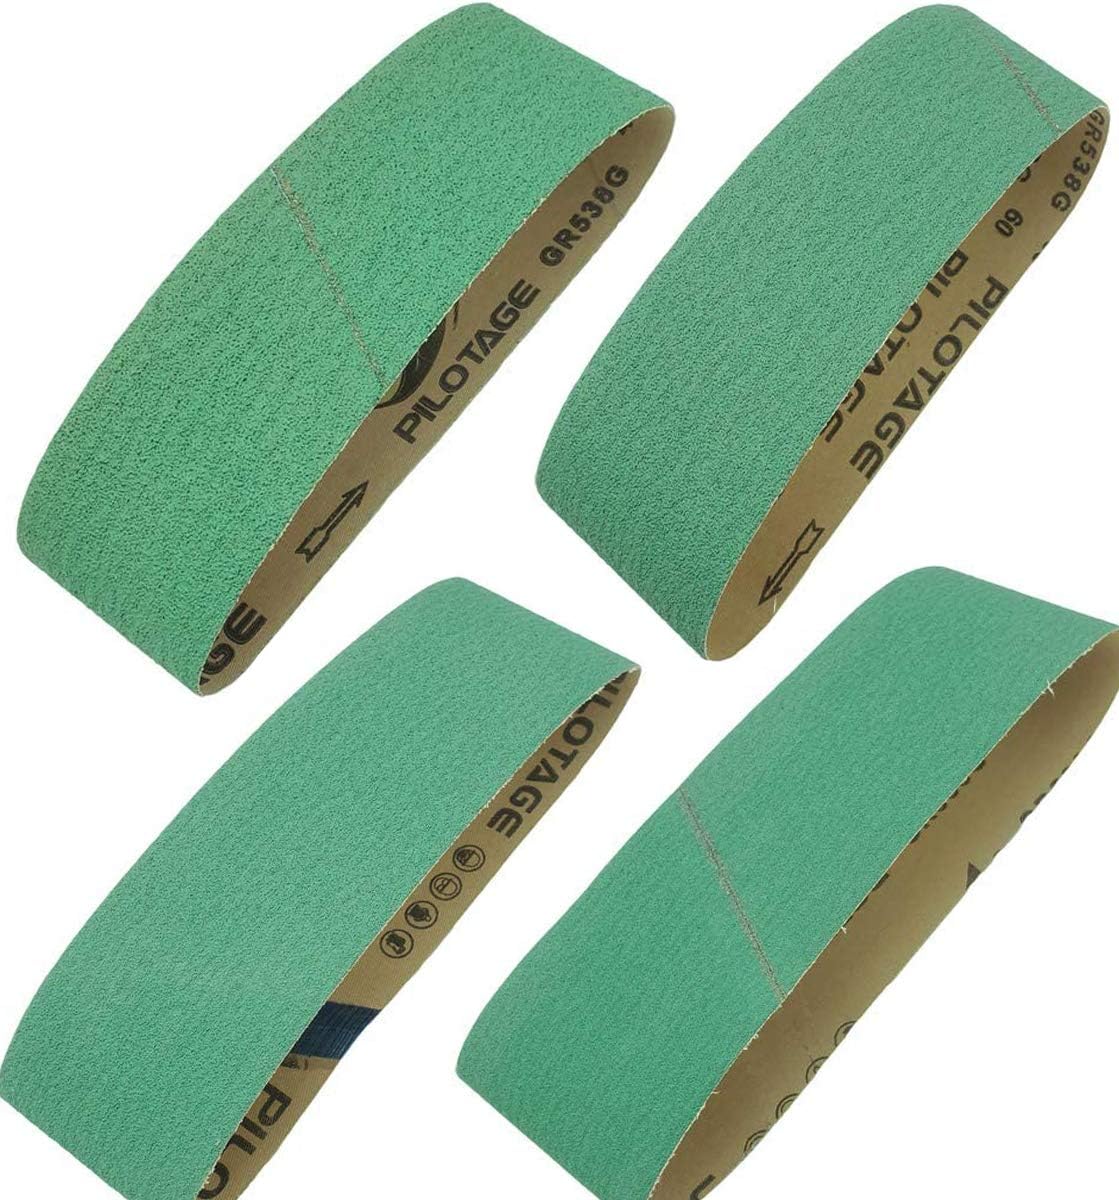 Sackorange 4 Pack 4 x 36 Higher Hardness Zirconia Sanding Belts - 40 60 80 and 120 Grits, Metal Grinding Sandpaper Belt for Metal, Wood, Cars, Furniture, Stainless Steel (4 X 36 Inch)